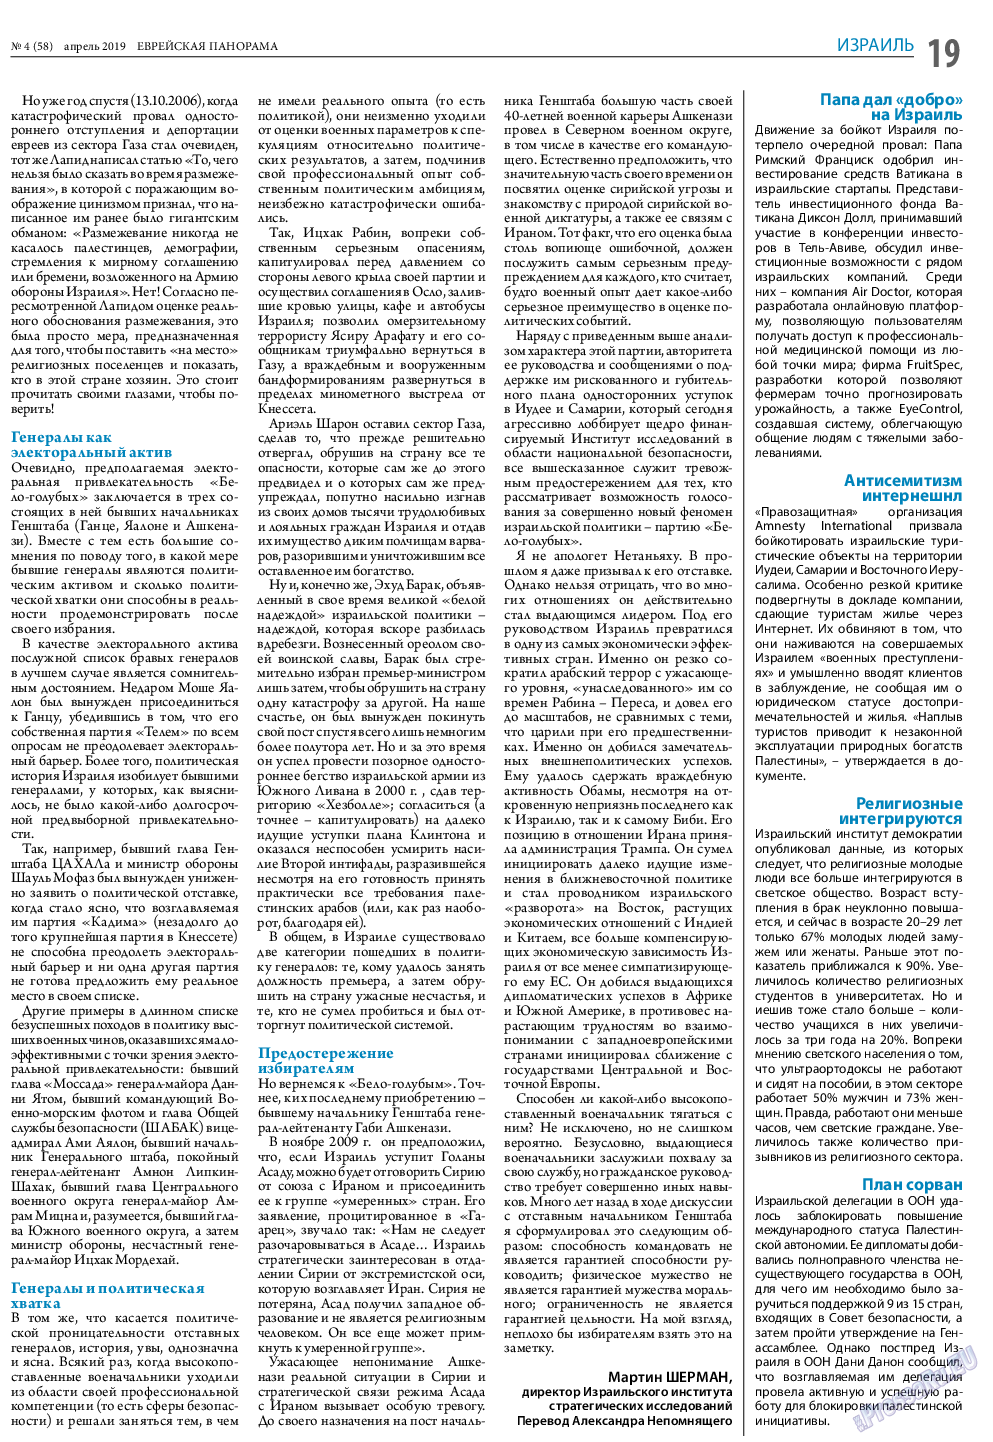 Еврейская панорама, газета. 2019 №4 стр.19